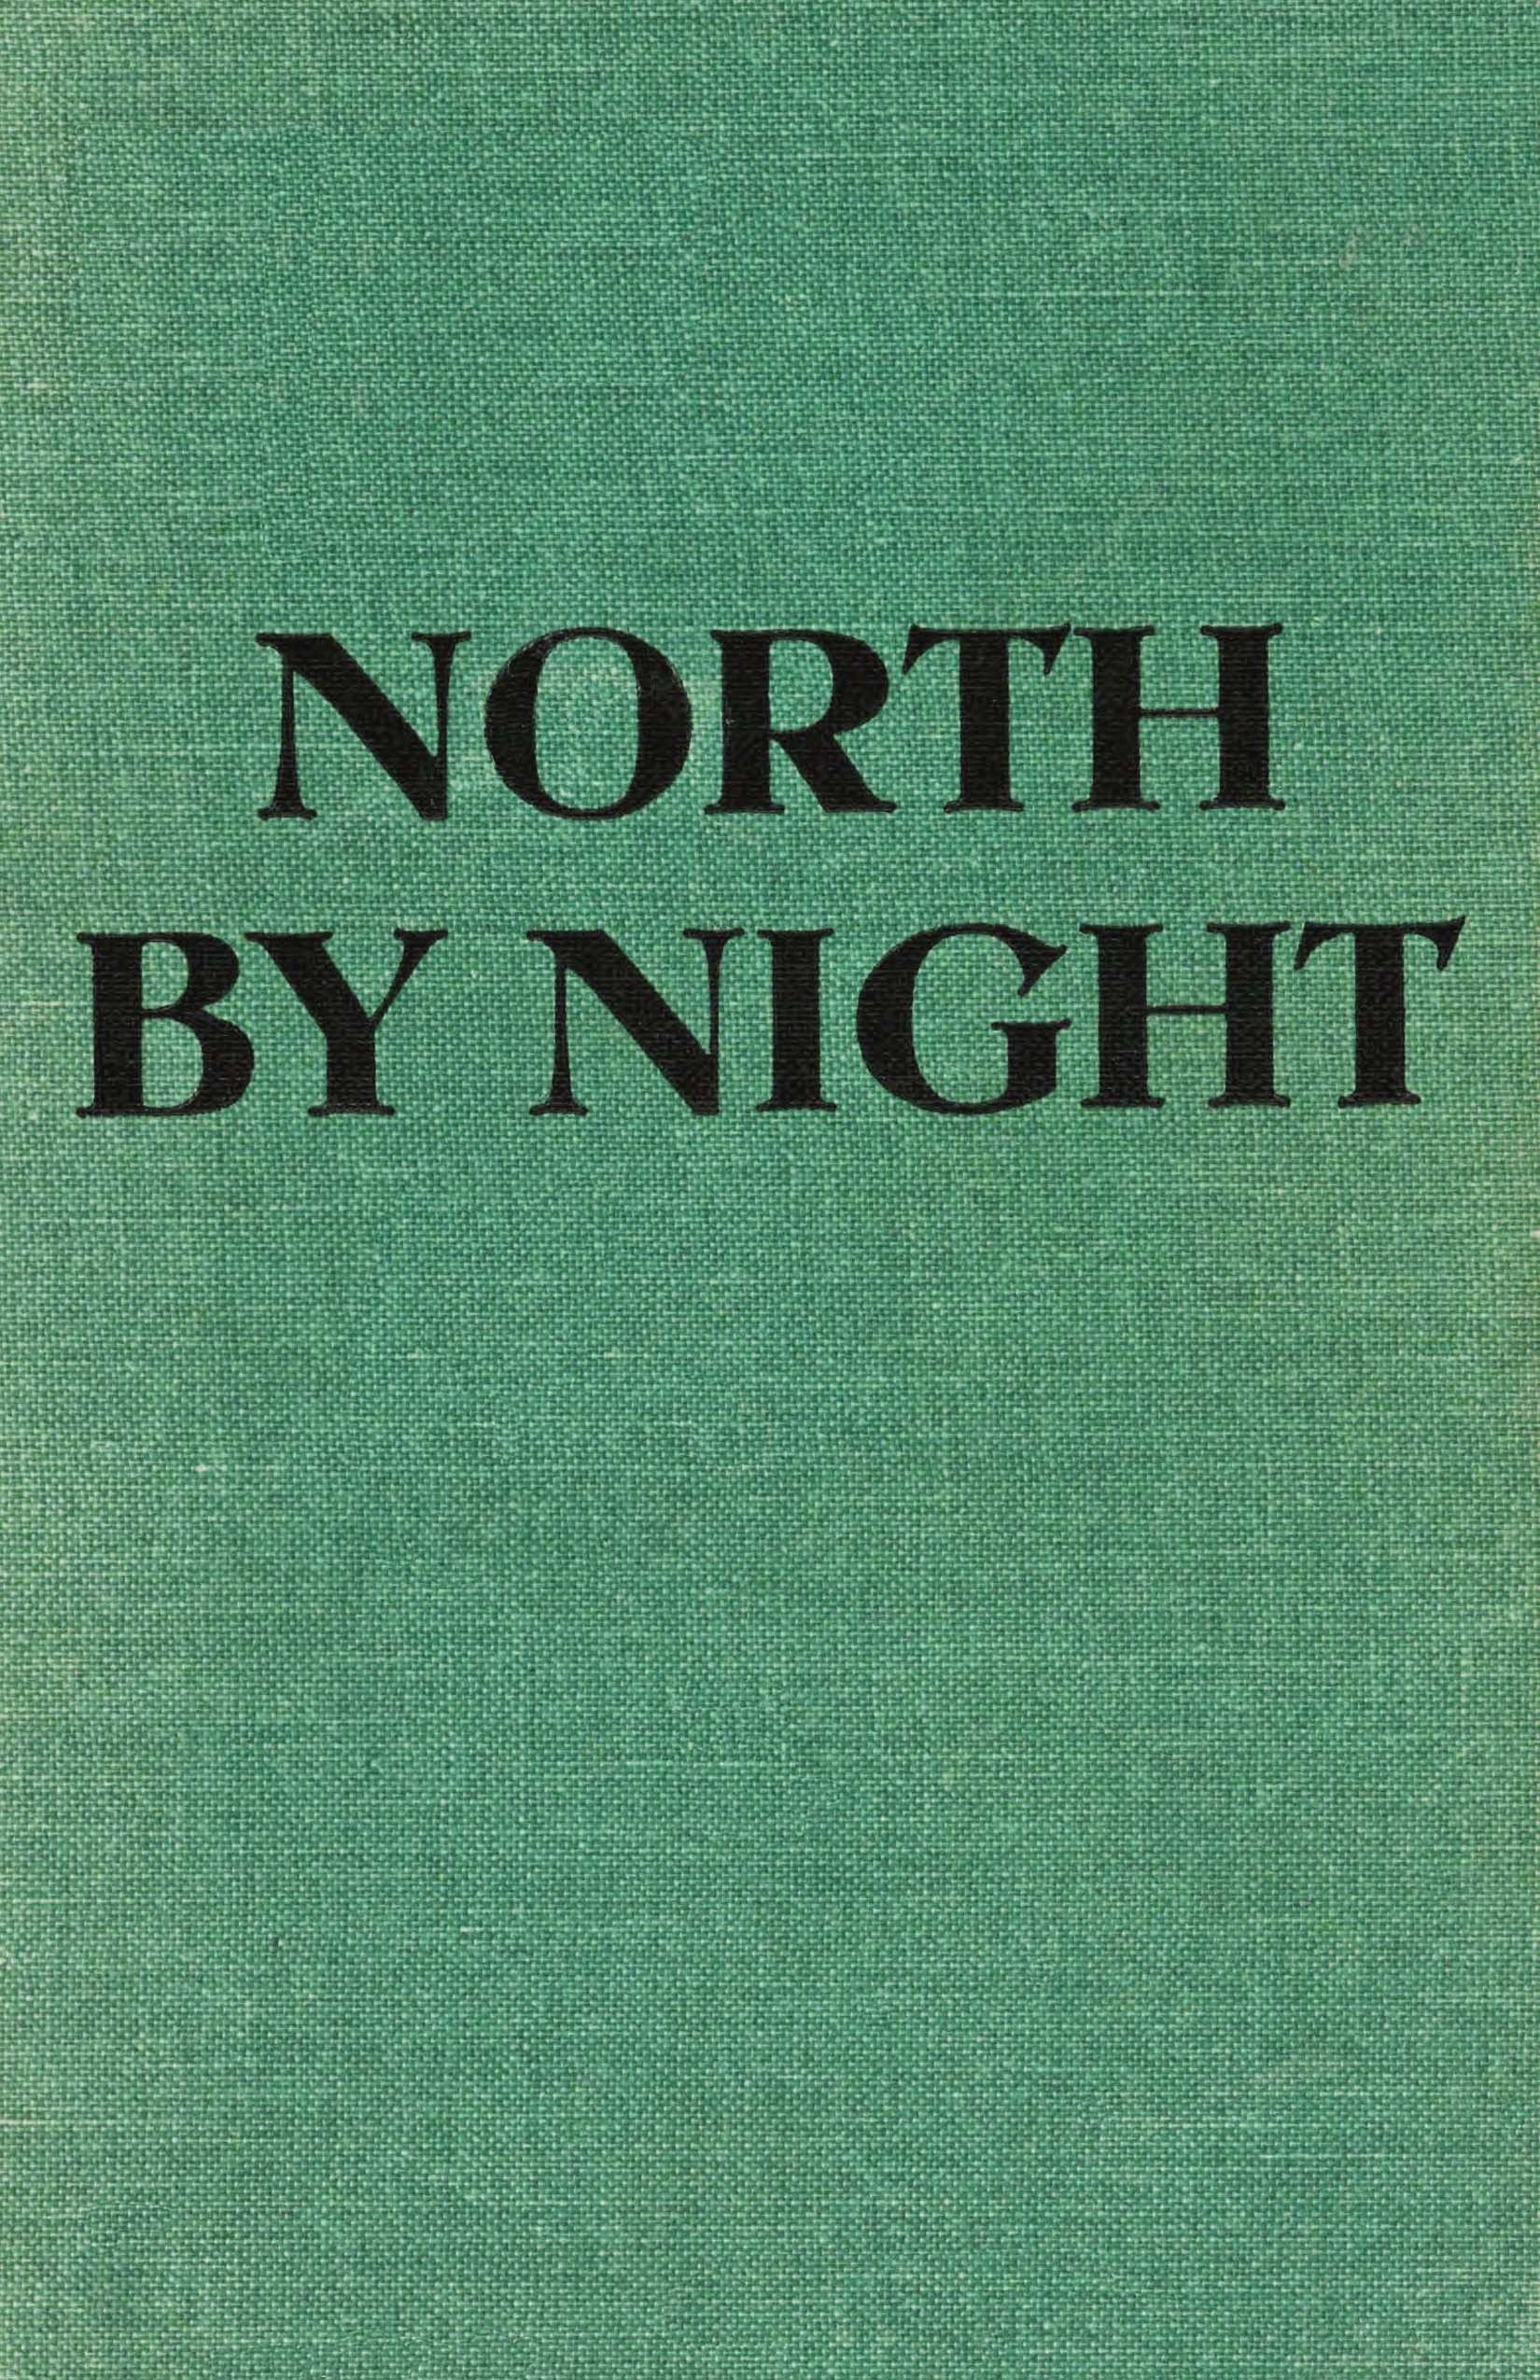 North by night